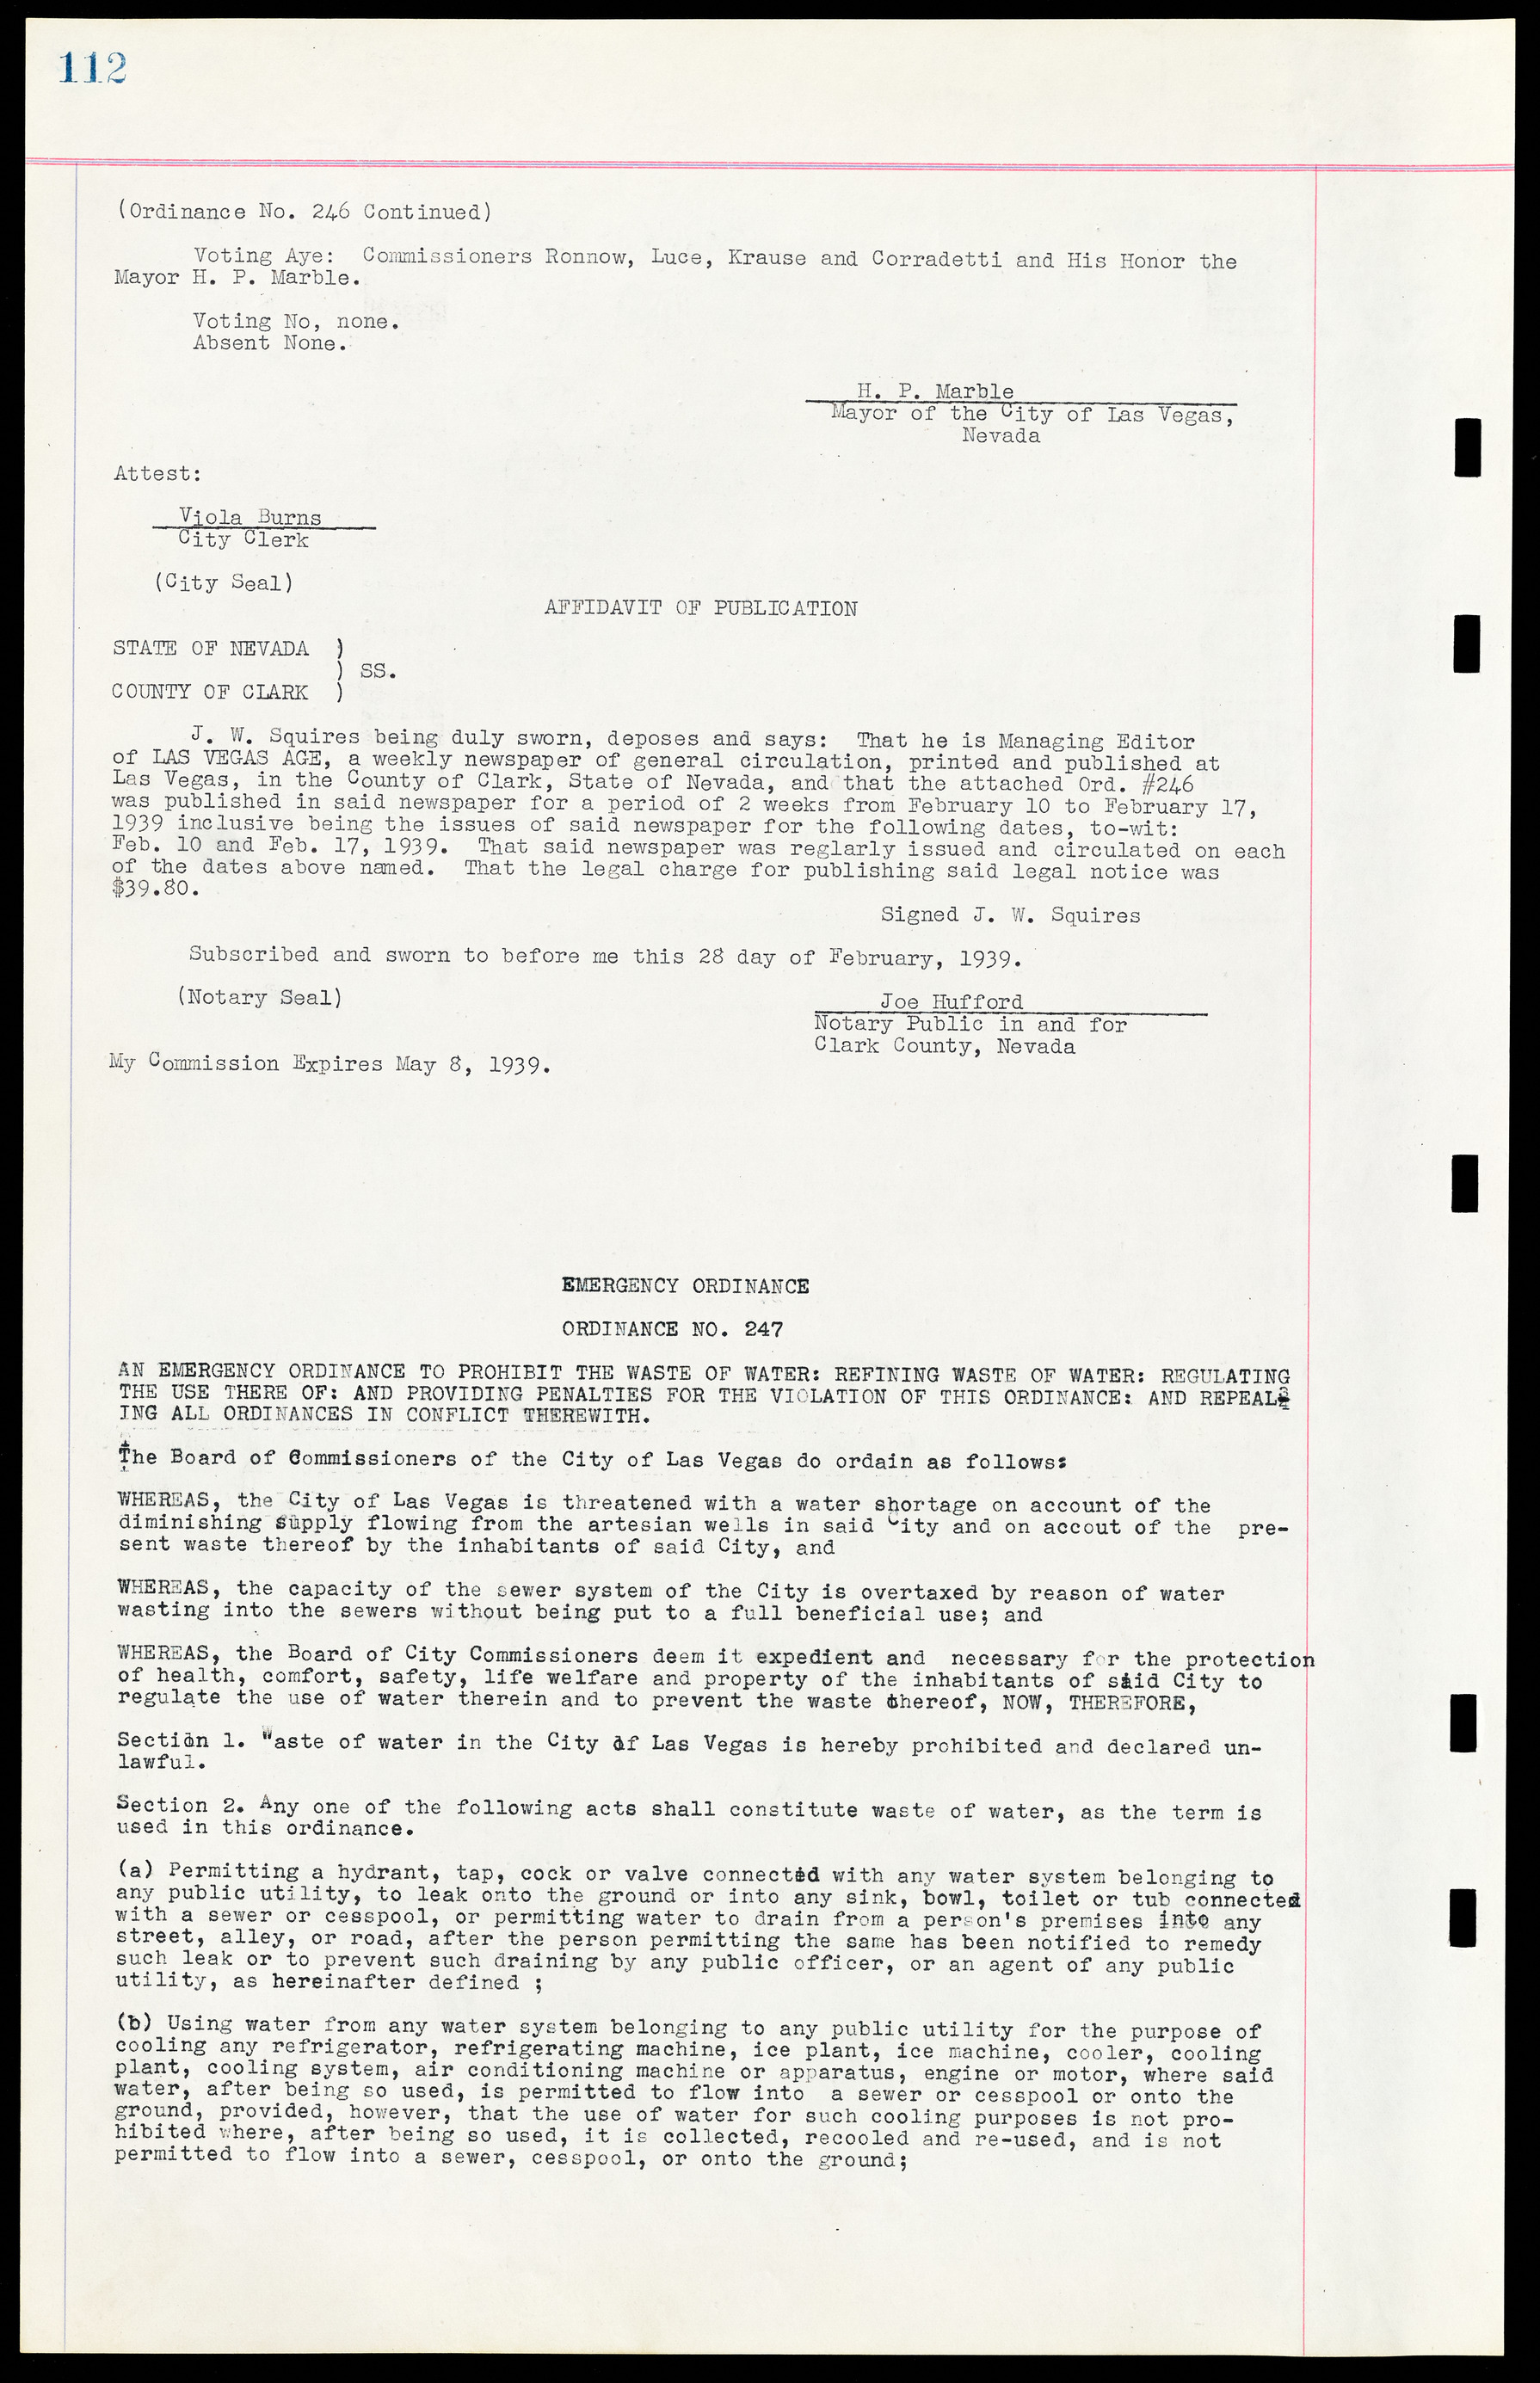 Las Vegas City Ordinances, March 31, 1933 to October 25, 1950, lvc000014-132